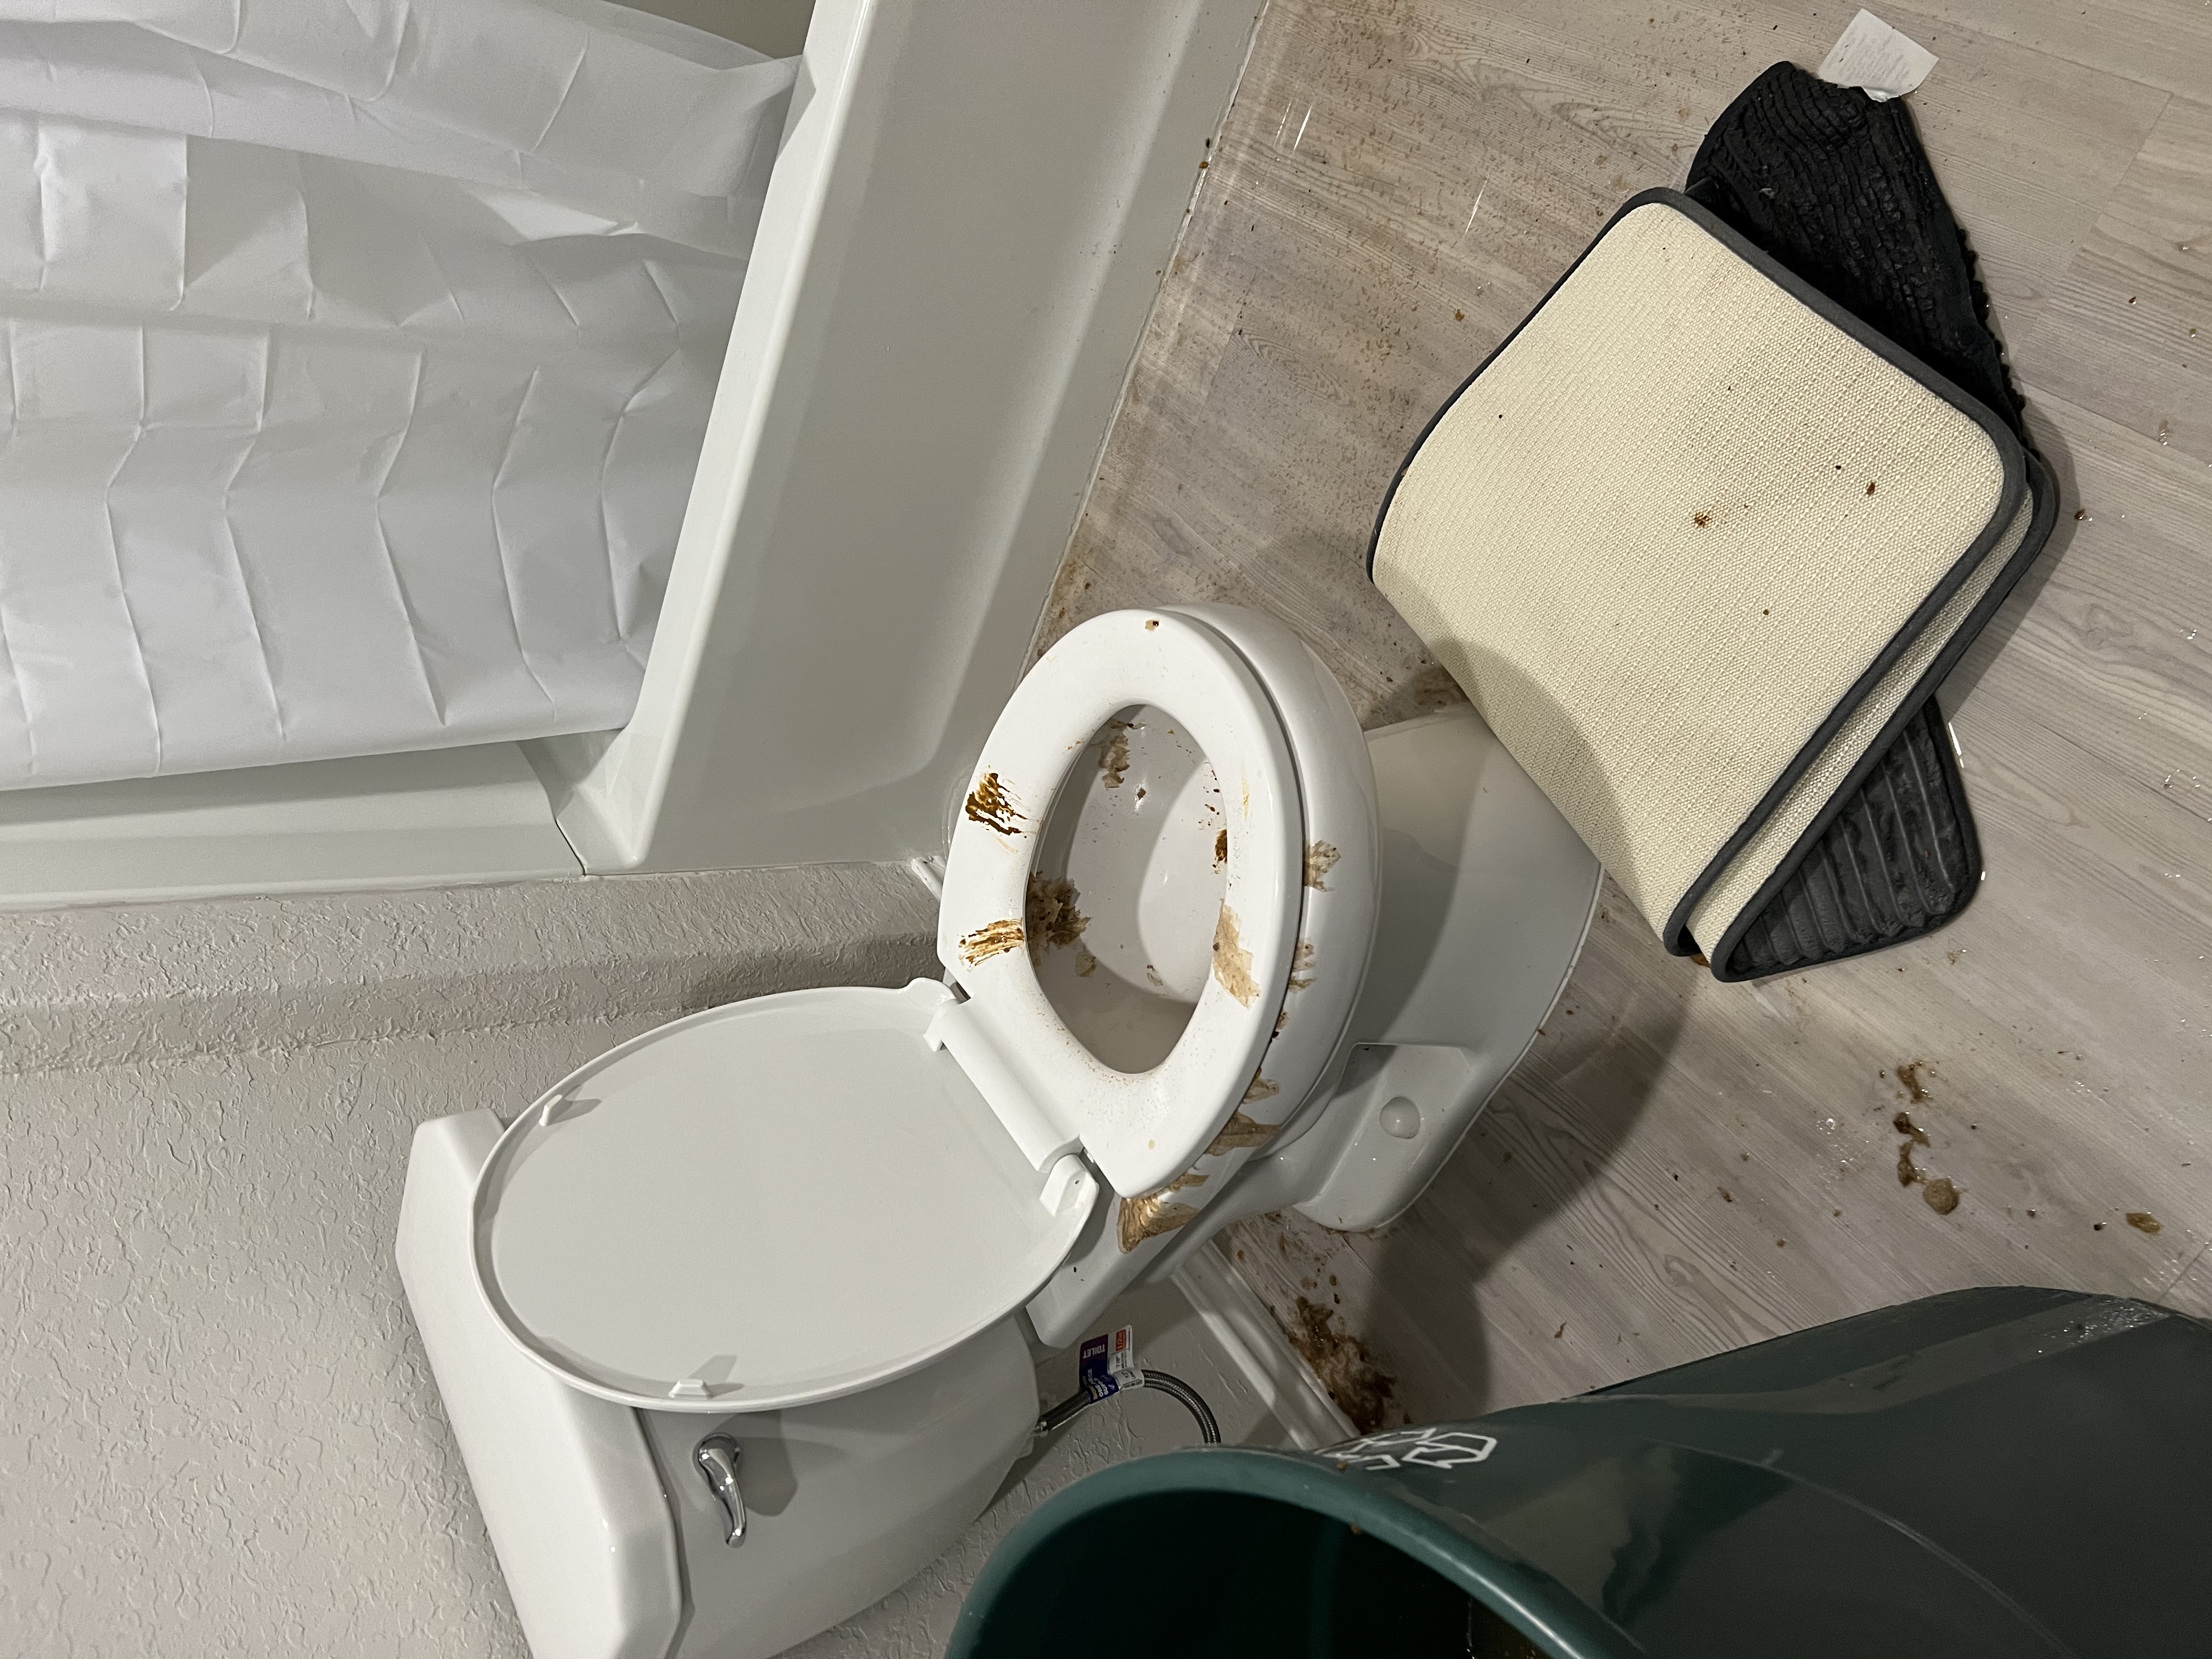 Lightning strike causes Florida home's toilet to explode